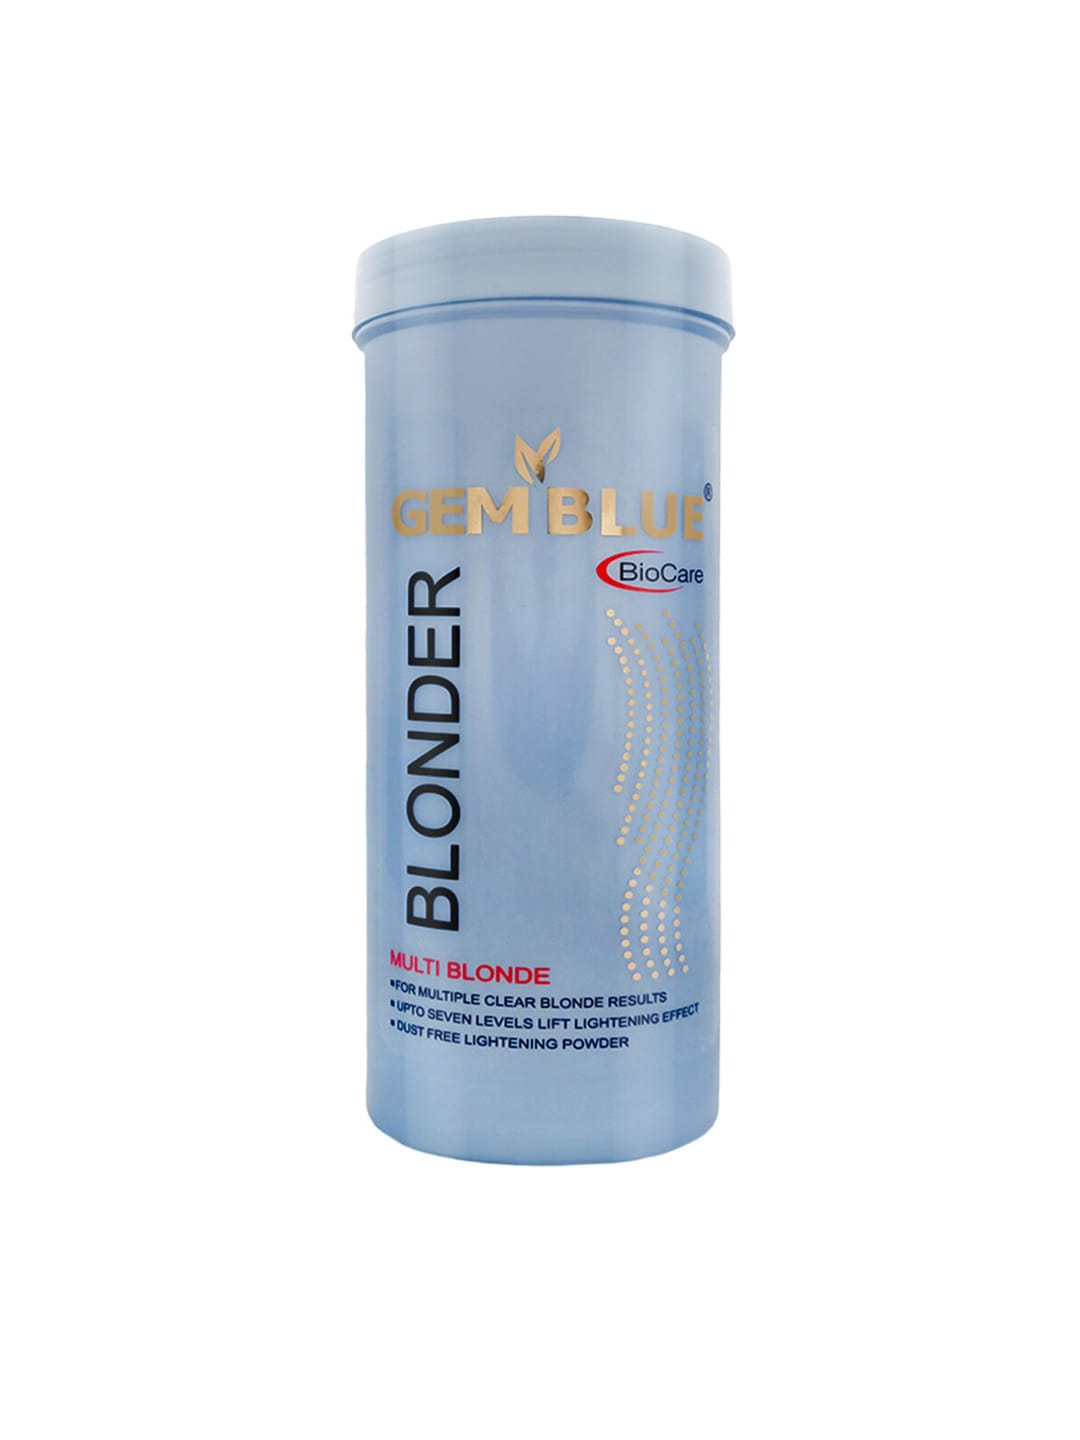 GEMBLUE BioCare Blonder Multi Blonde Powder - Lightening 400 g Price in India